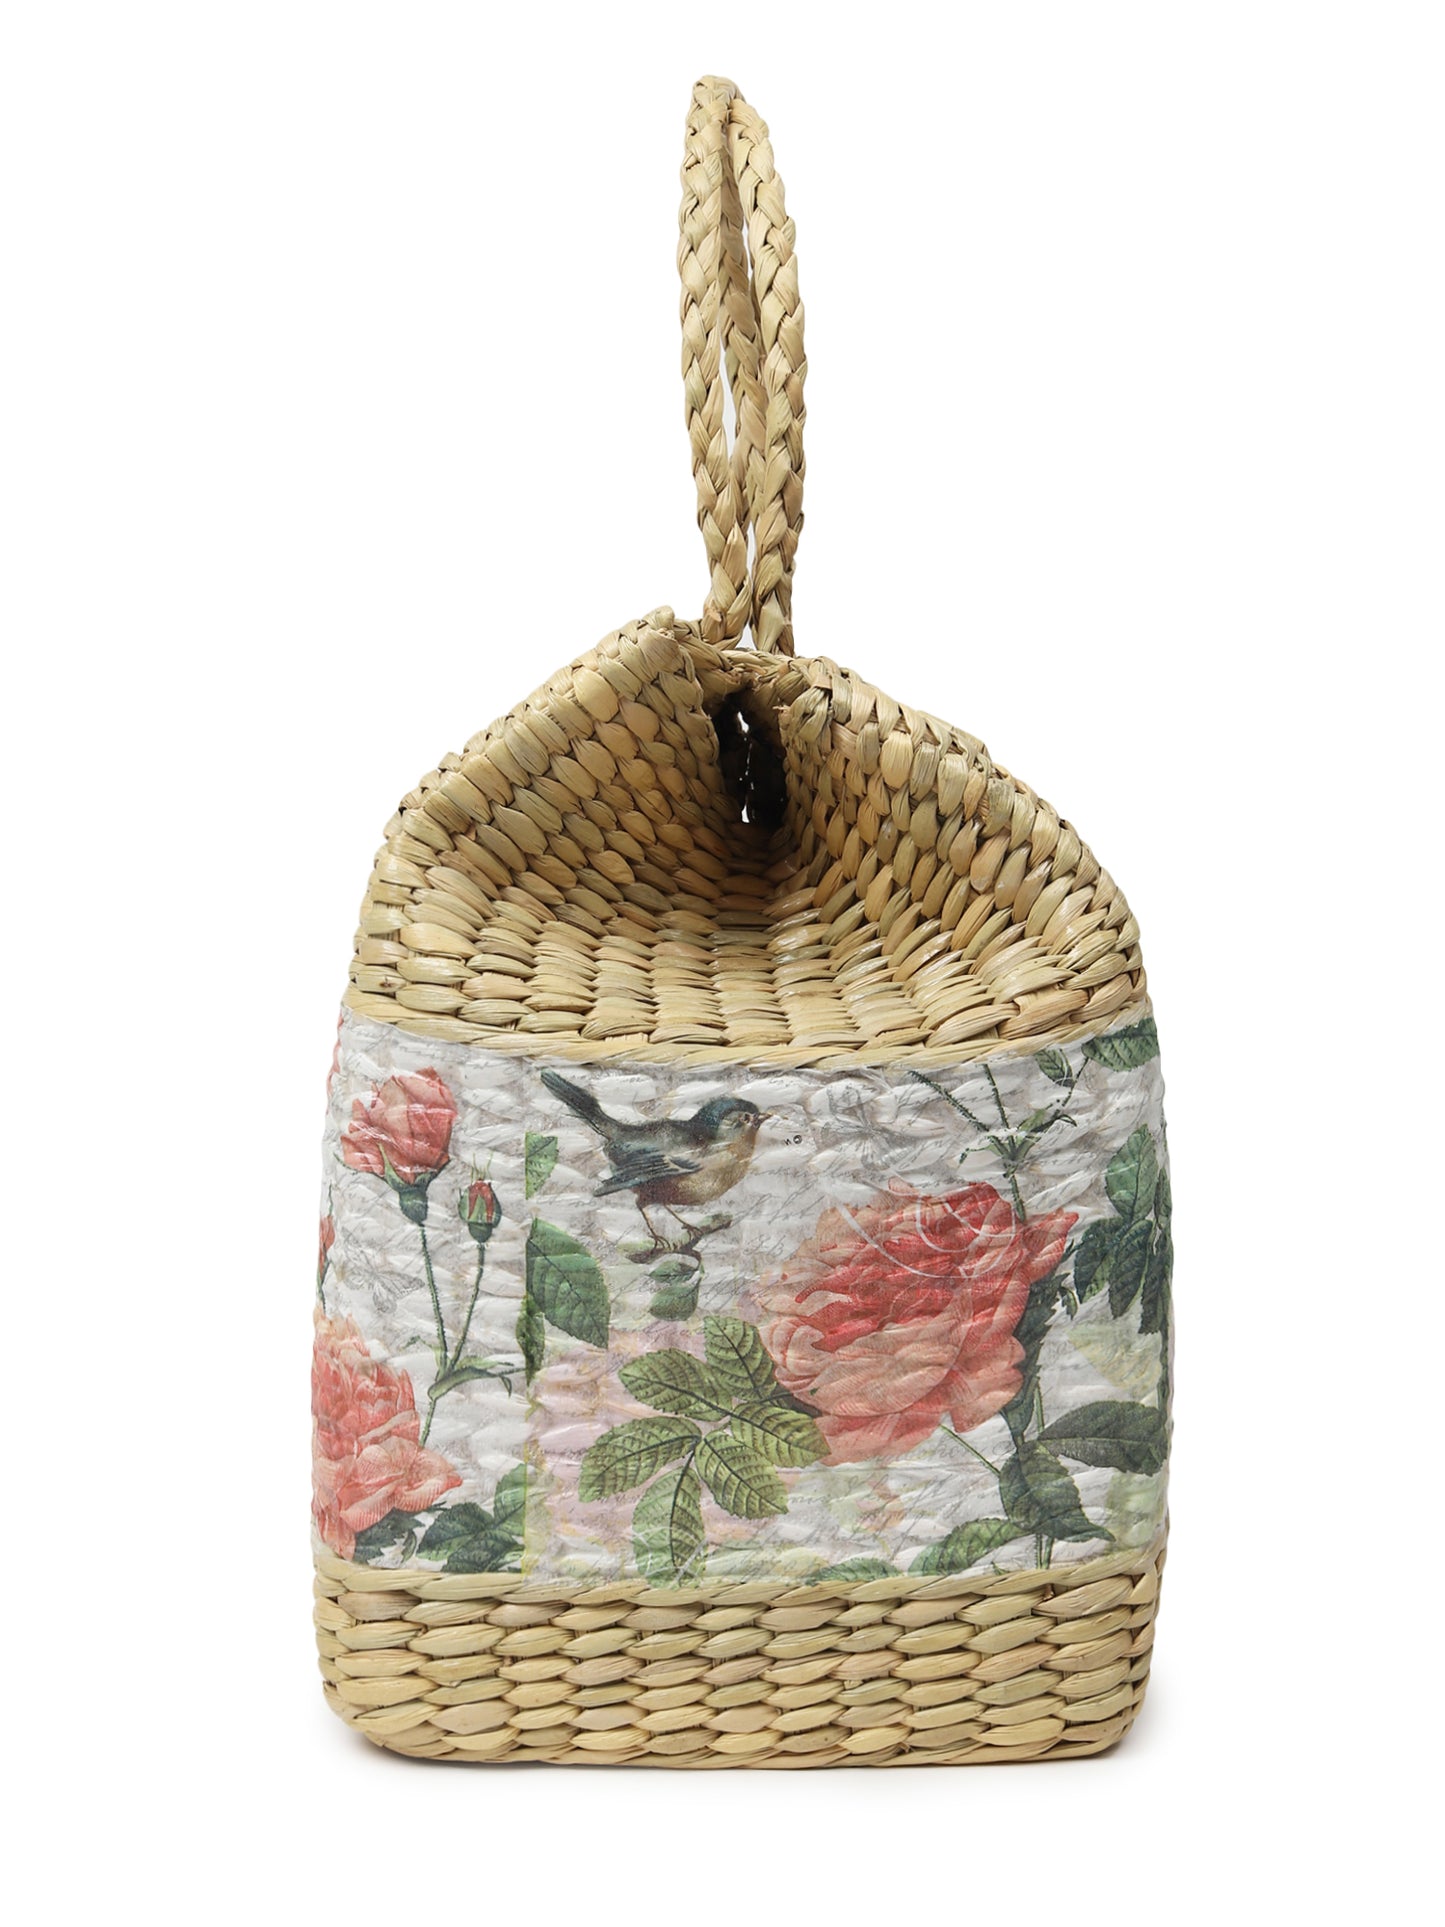 Travel Basket | Seagrass Large Picnic Basket